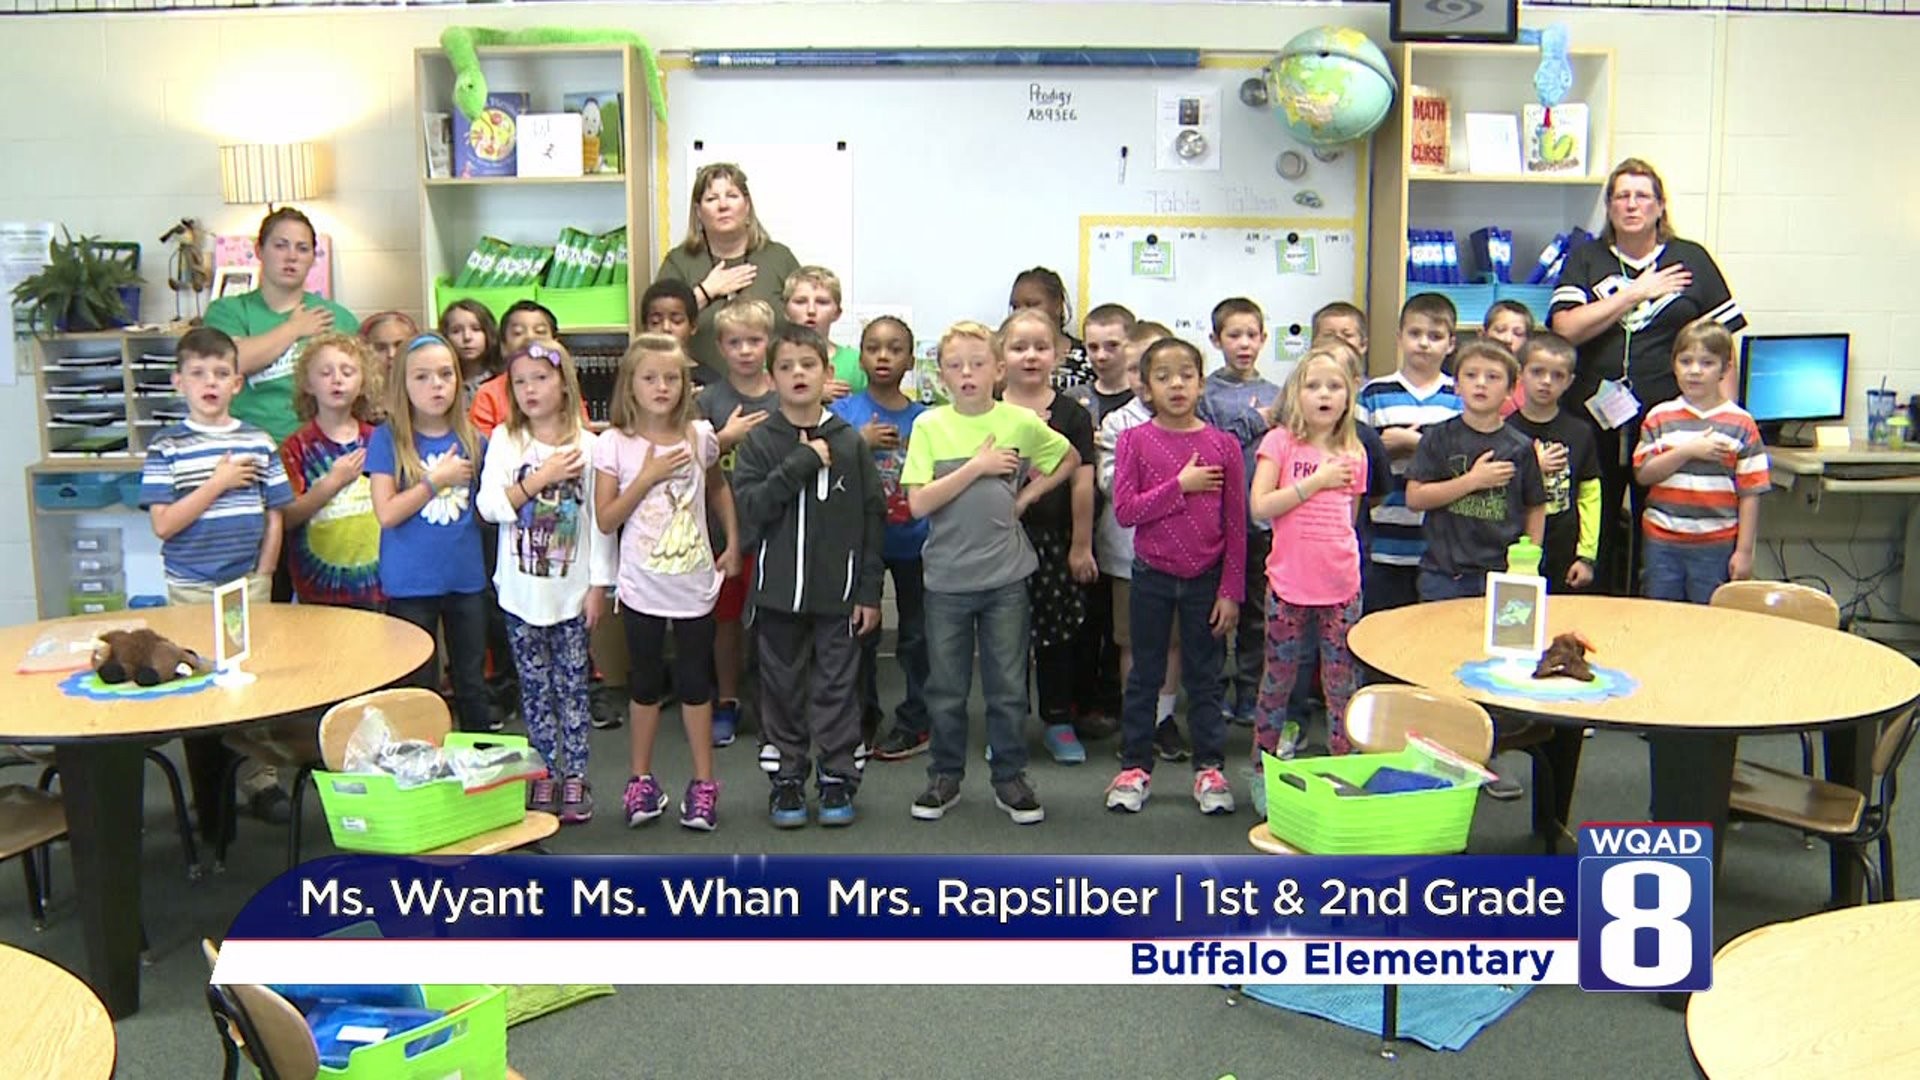 Ms Wyant, Ms. Whan, Mrs. Rapsilber 1st & 2nd grade - Buffalo Elementary